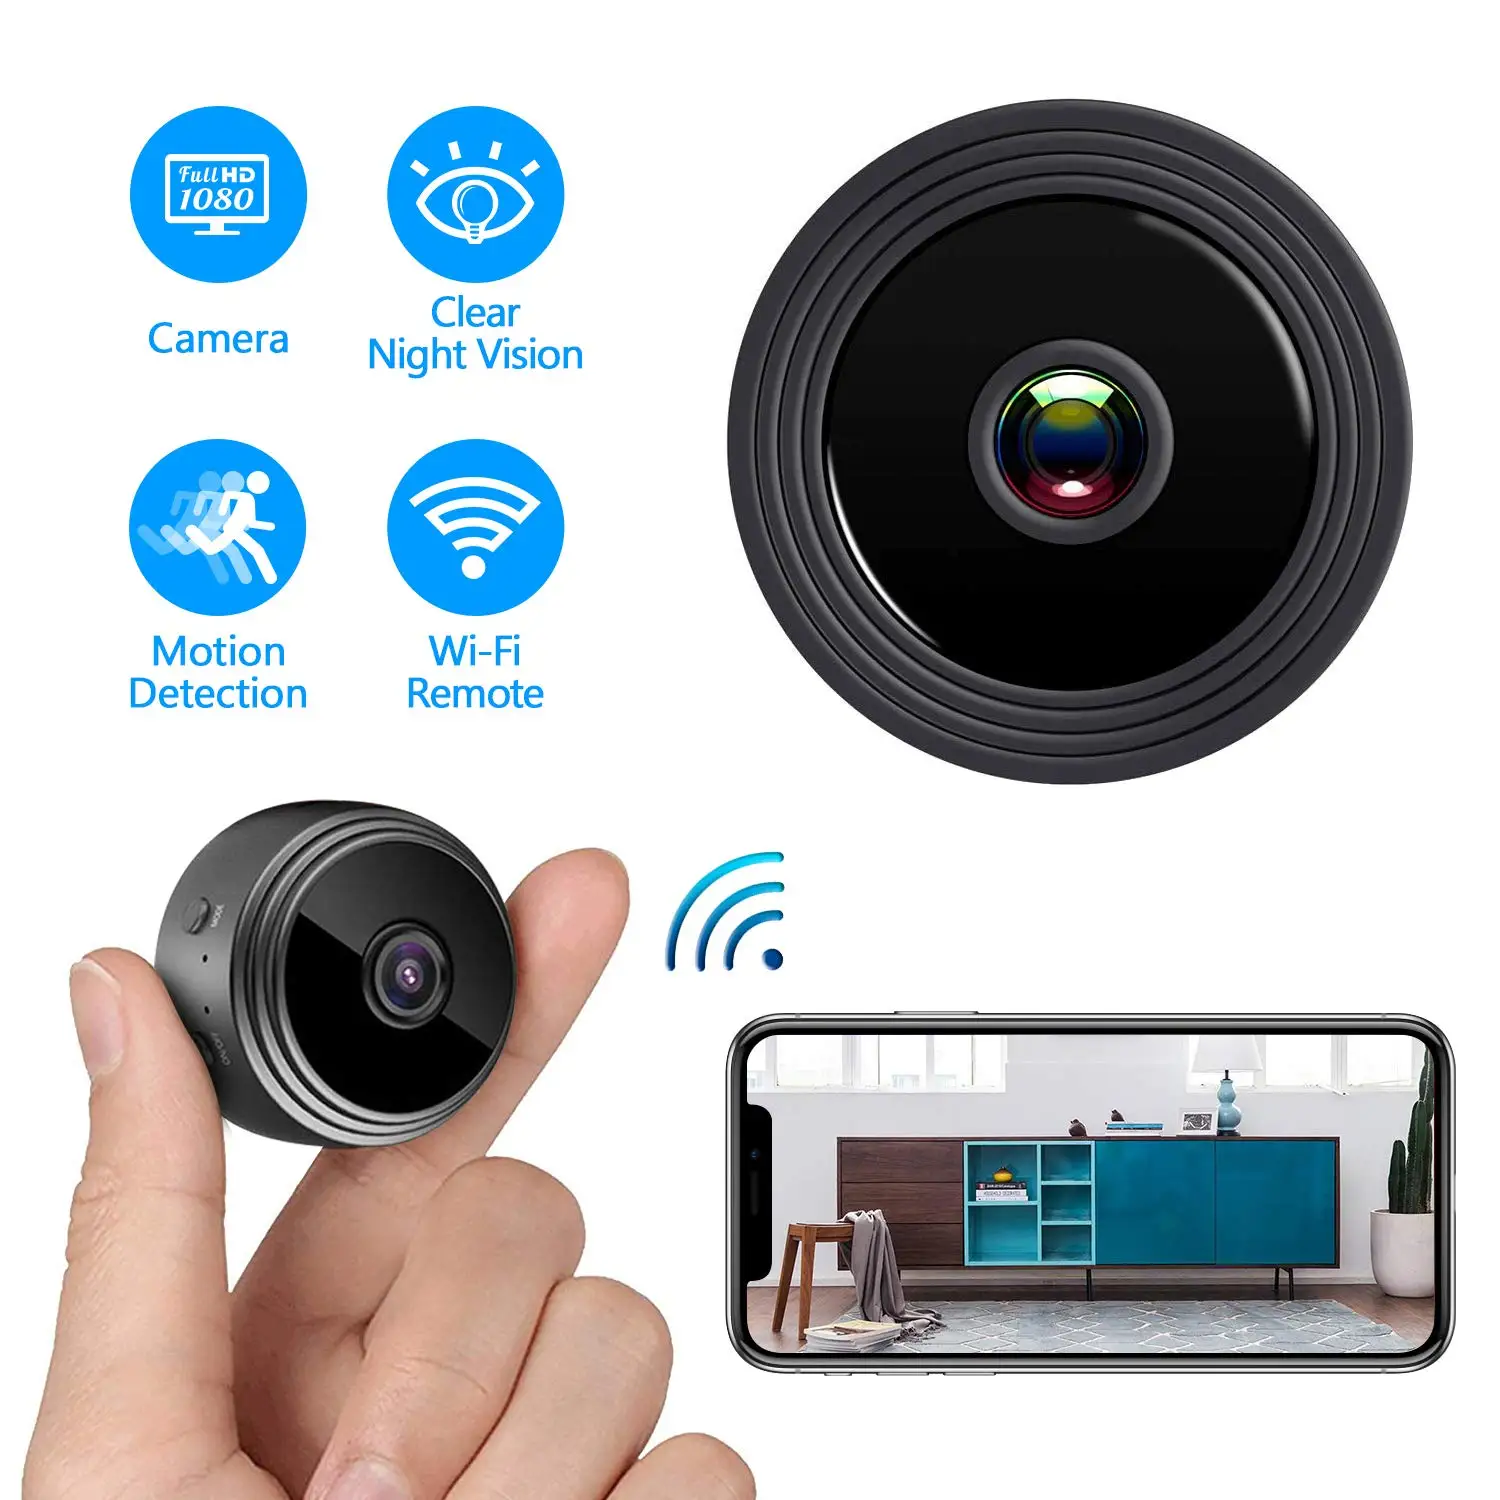 

mini camara A9 WiFi Hidden Camera Wireless HD 1080P Indoor CCTV Cam wireless Home WiFi Security surveillance Camera Nanny Cam, Black and white